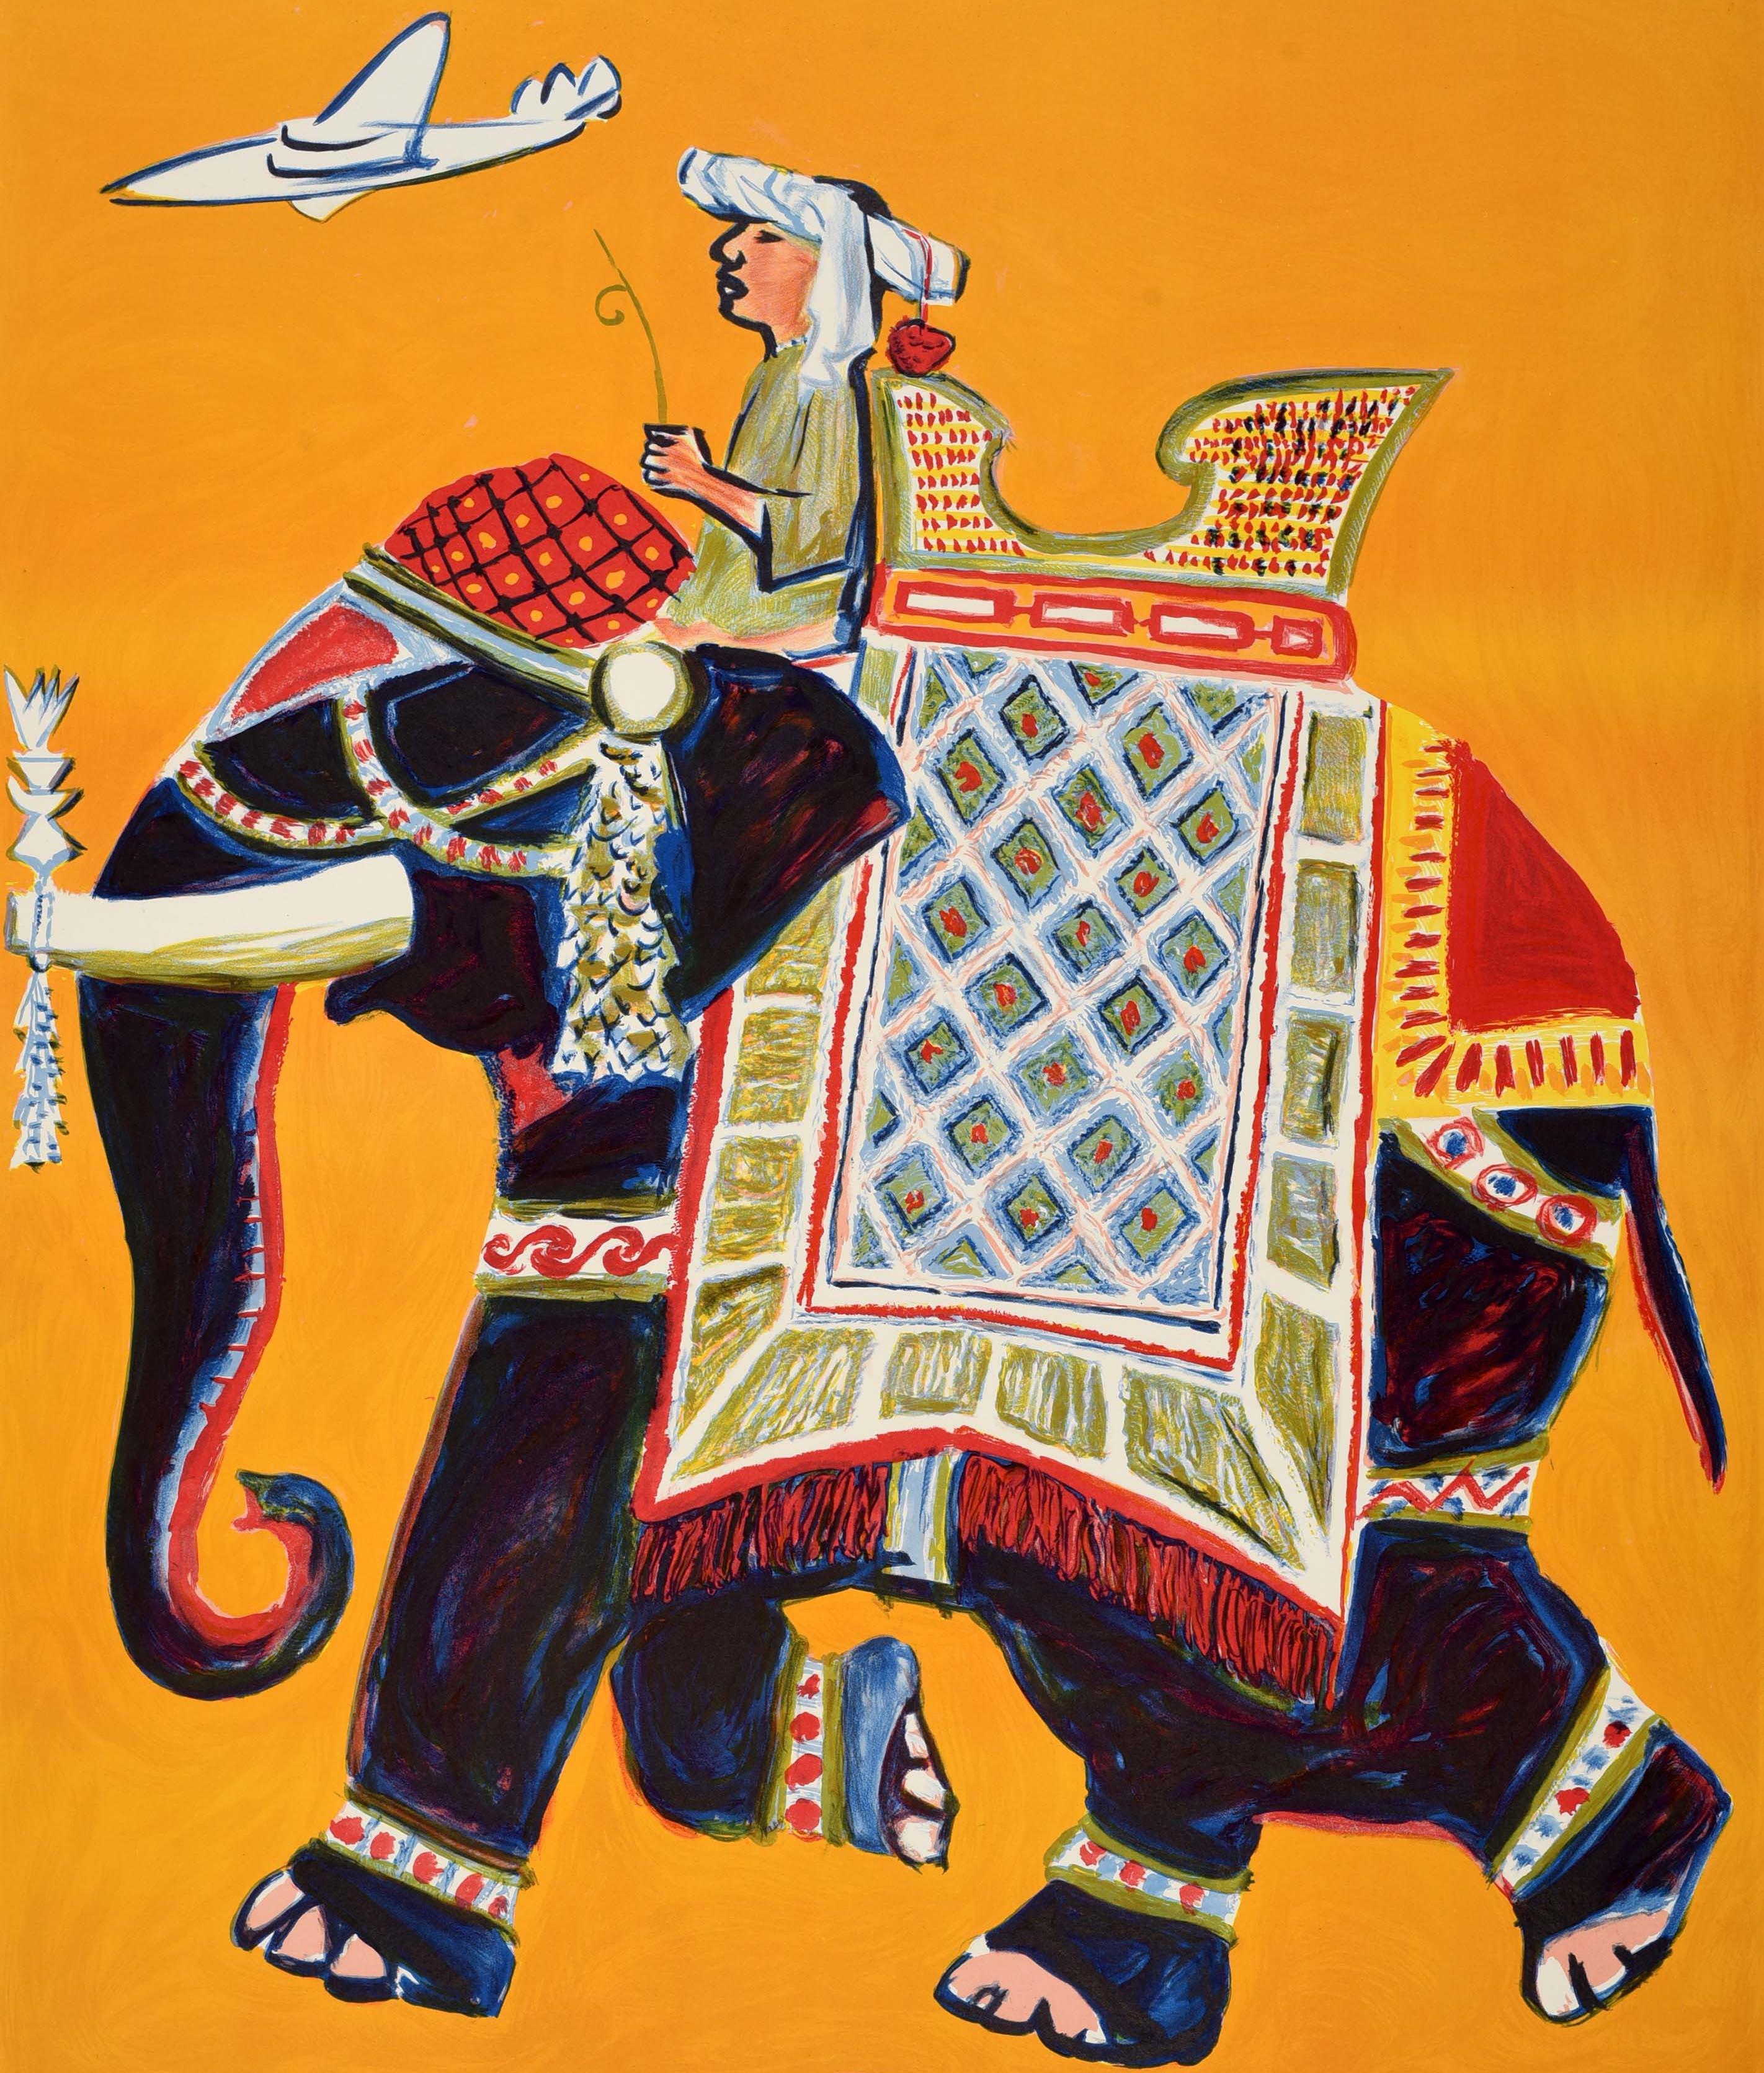 Original Vintage South Asia Travel Poster Air Ceylon Airline Sri Lanka Elephant - Print by Unknown